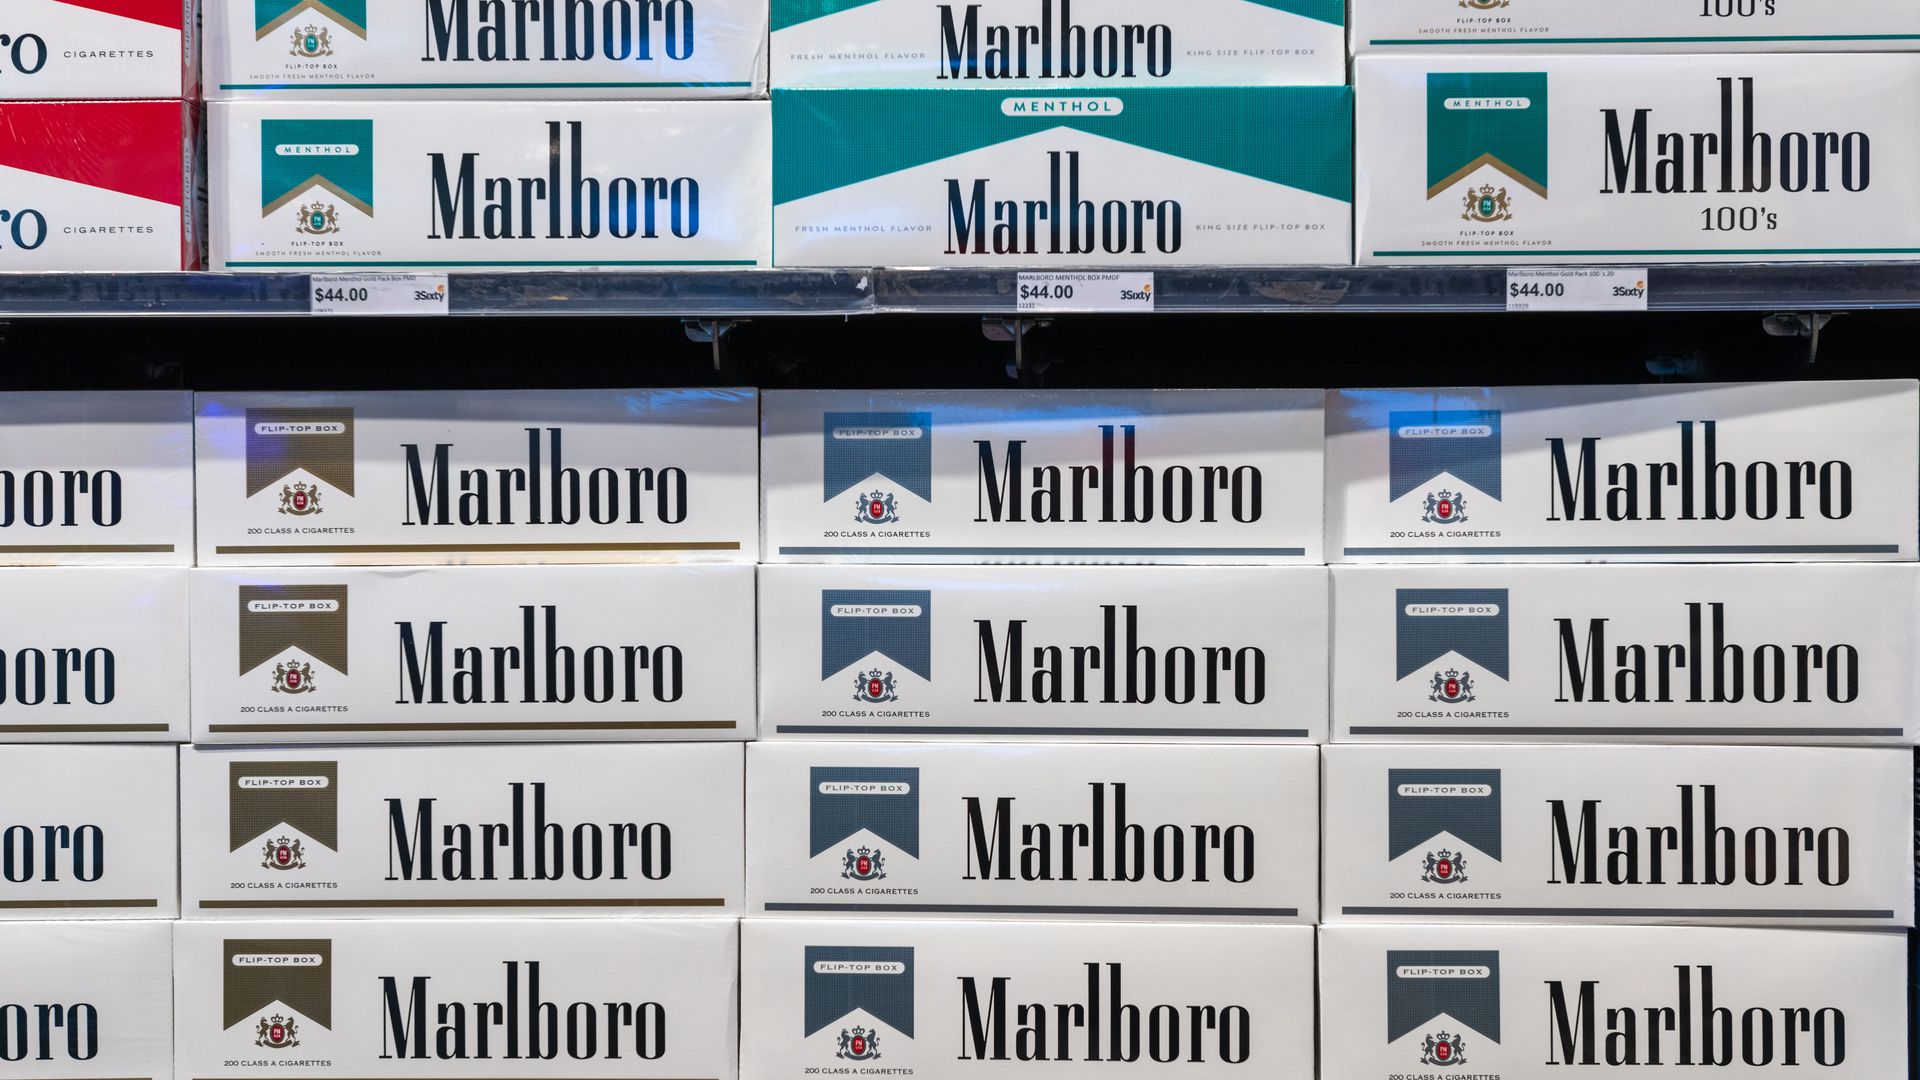 Boxes of Marlboro cigarettes stacked